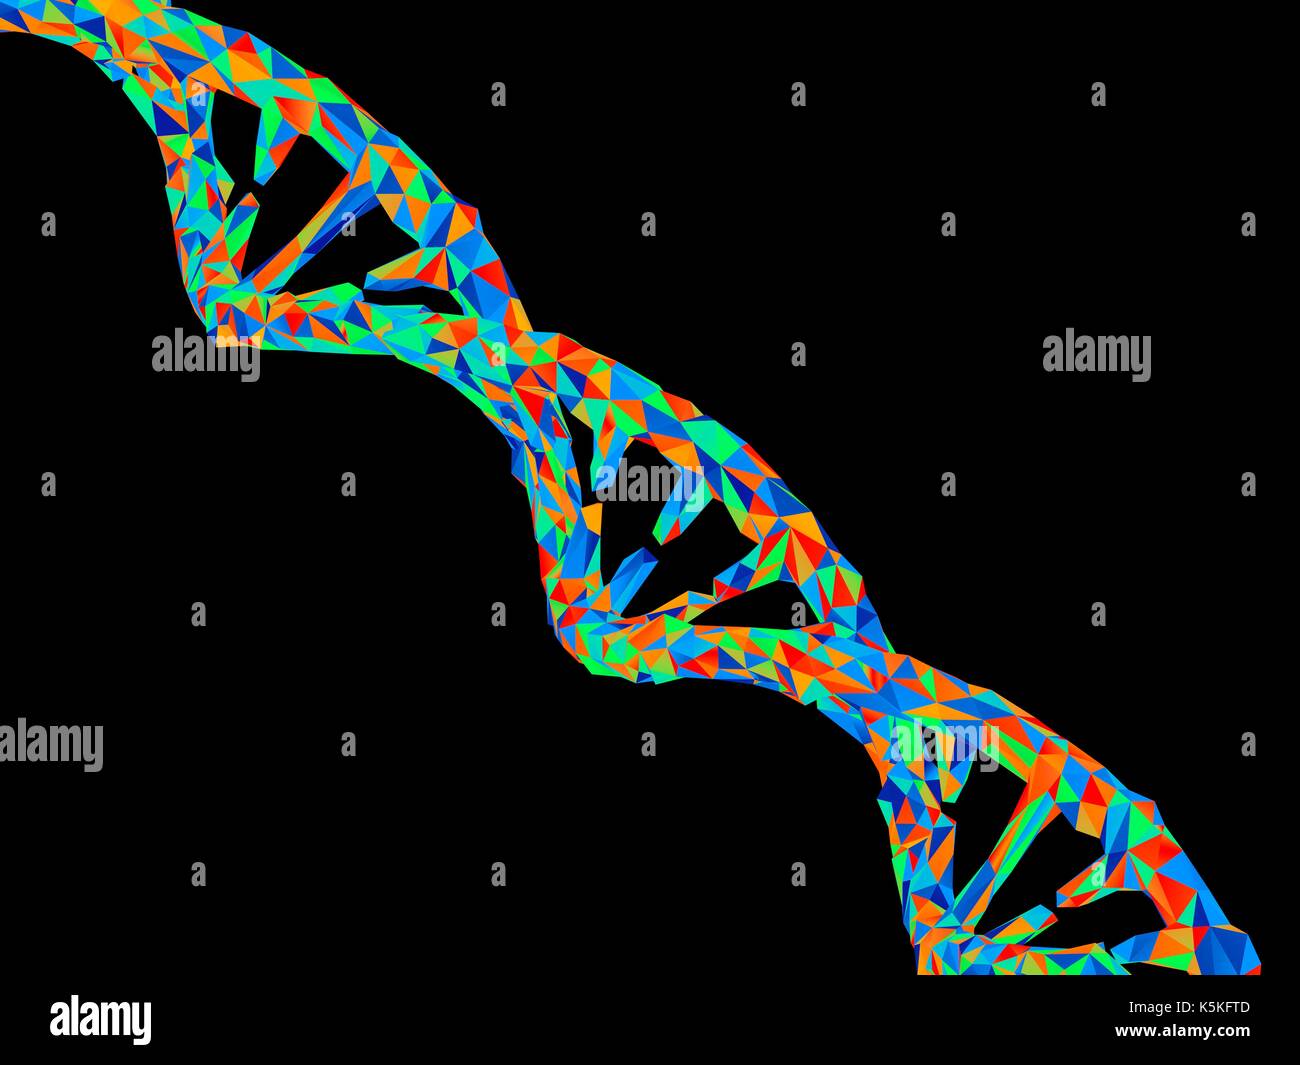 DNA (deoxyribonucleic acid) strand, low polygon style llustration. Stock Photo